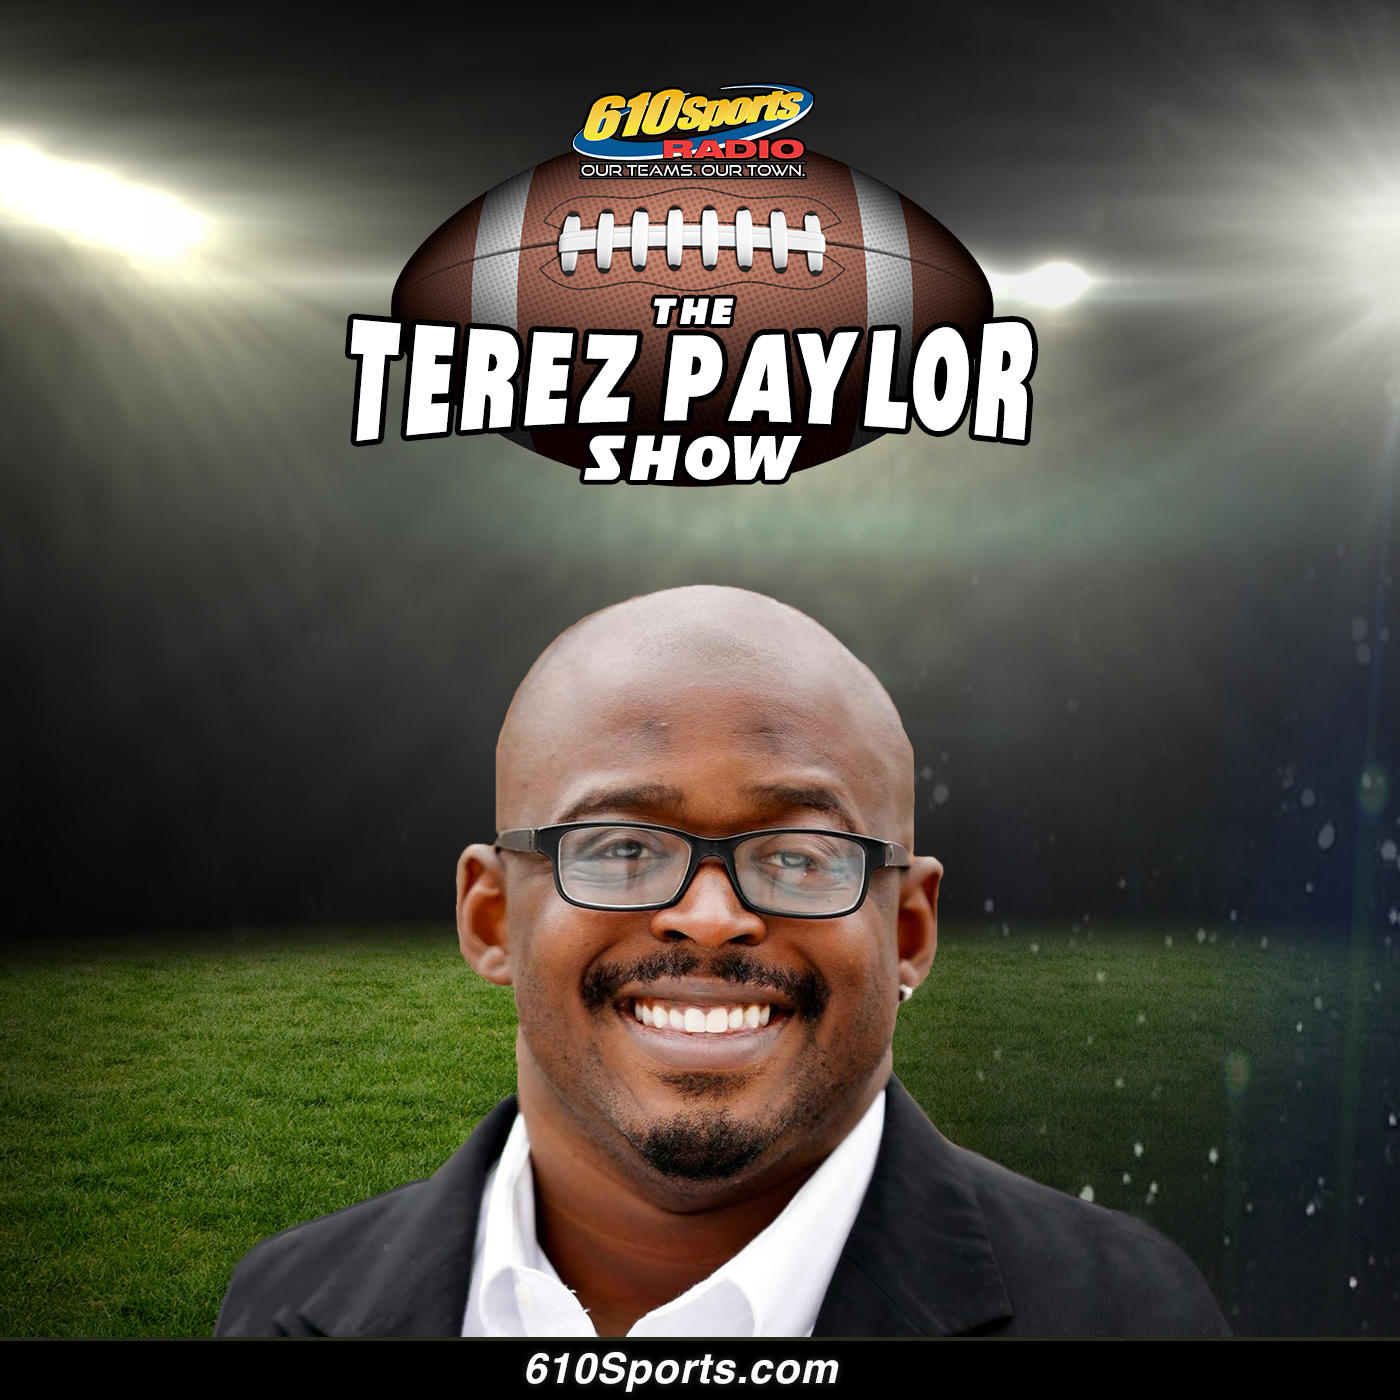 12/21/20 - The Terez Paylor Show